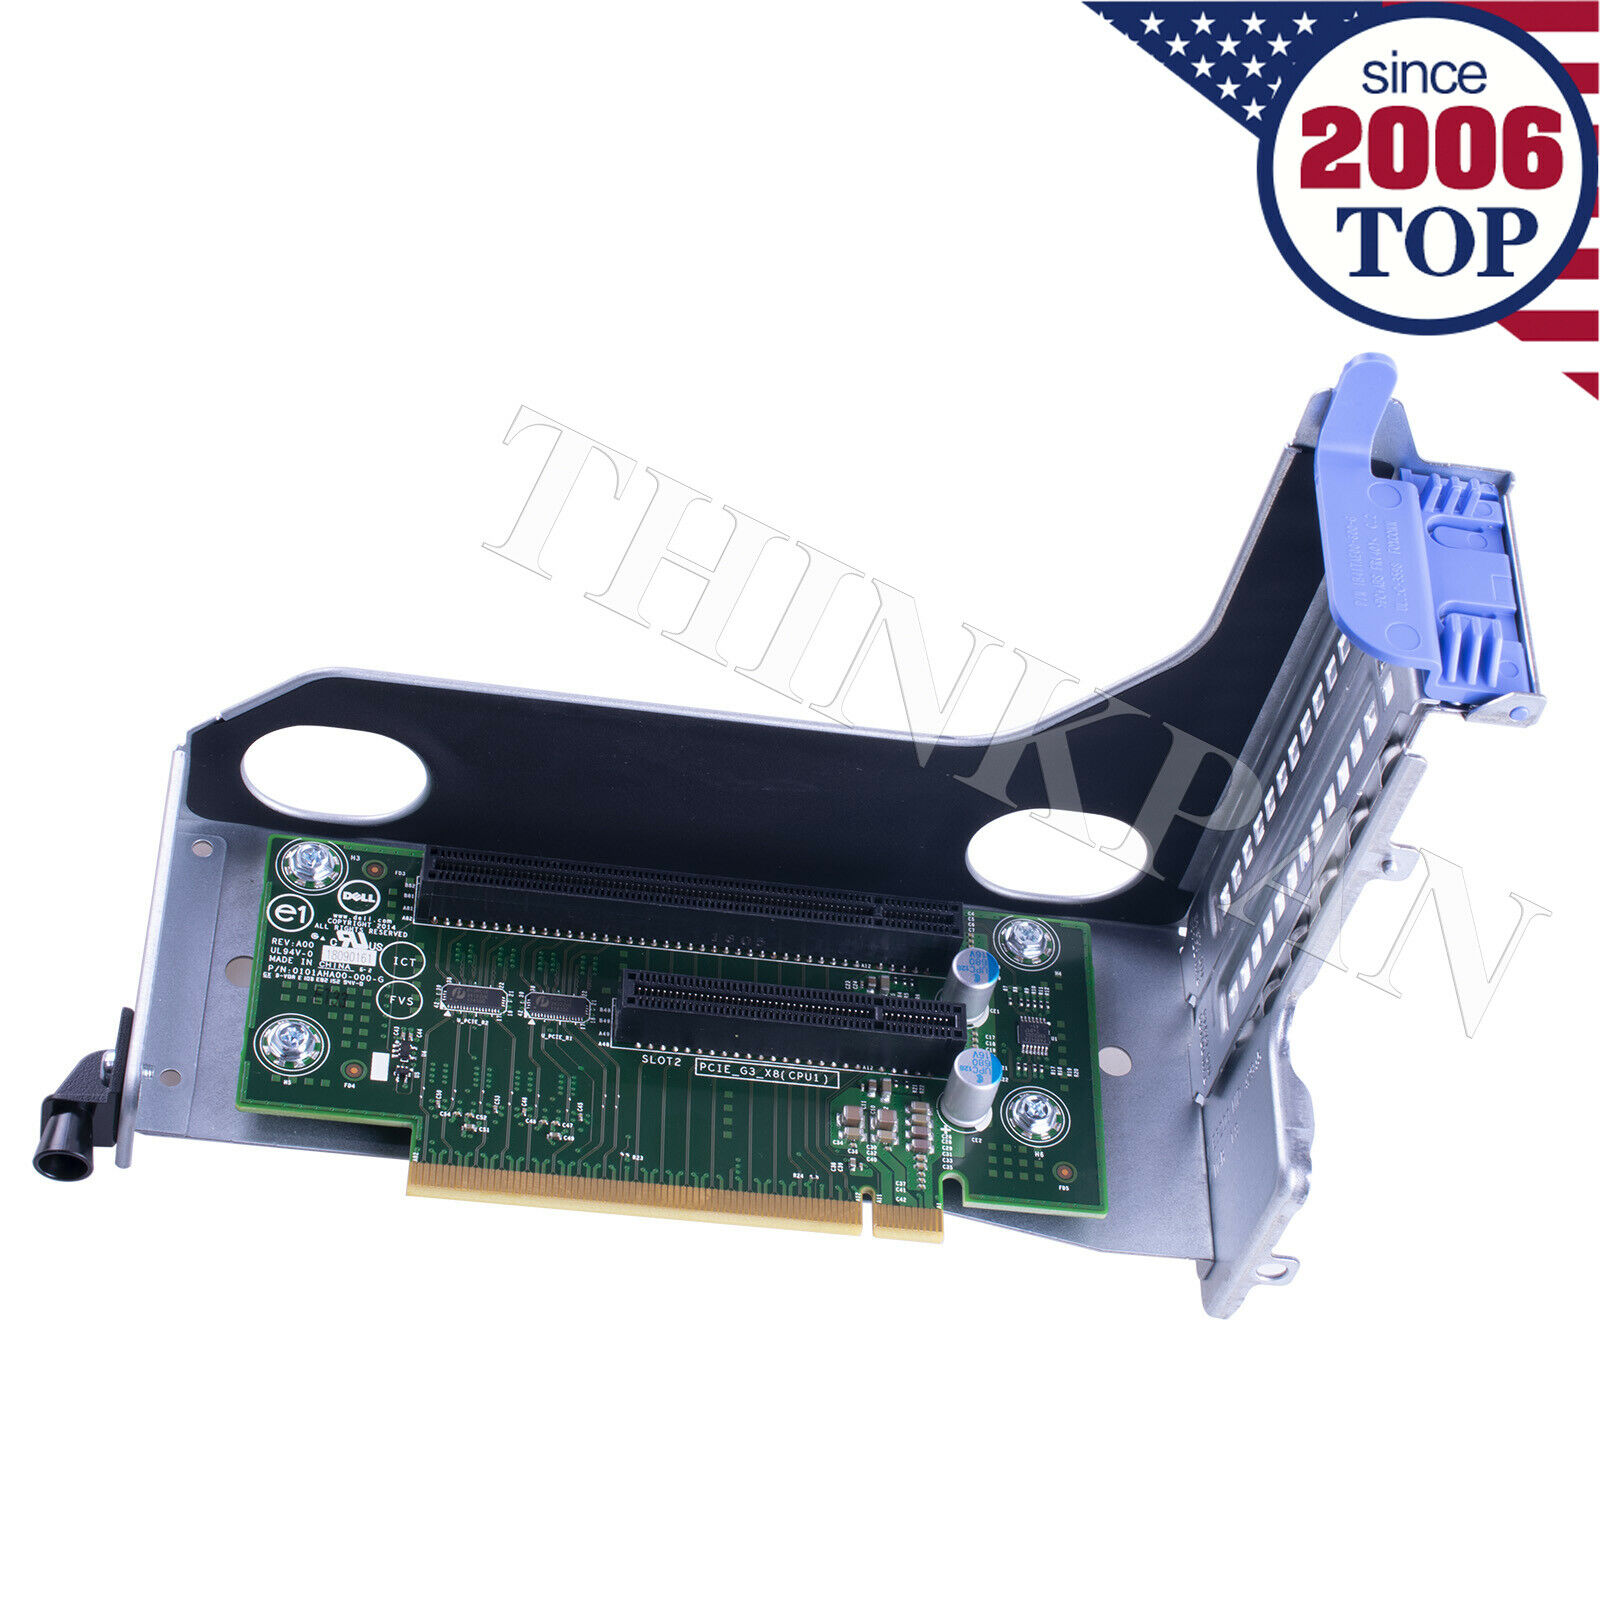 Dell Poweredge R530 2U PCIe X16 X8 Slot 2 Riser Card w/ Bracket KGP90 0KGP90 US